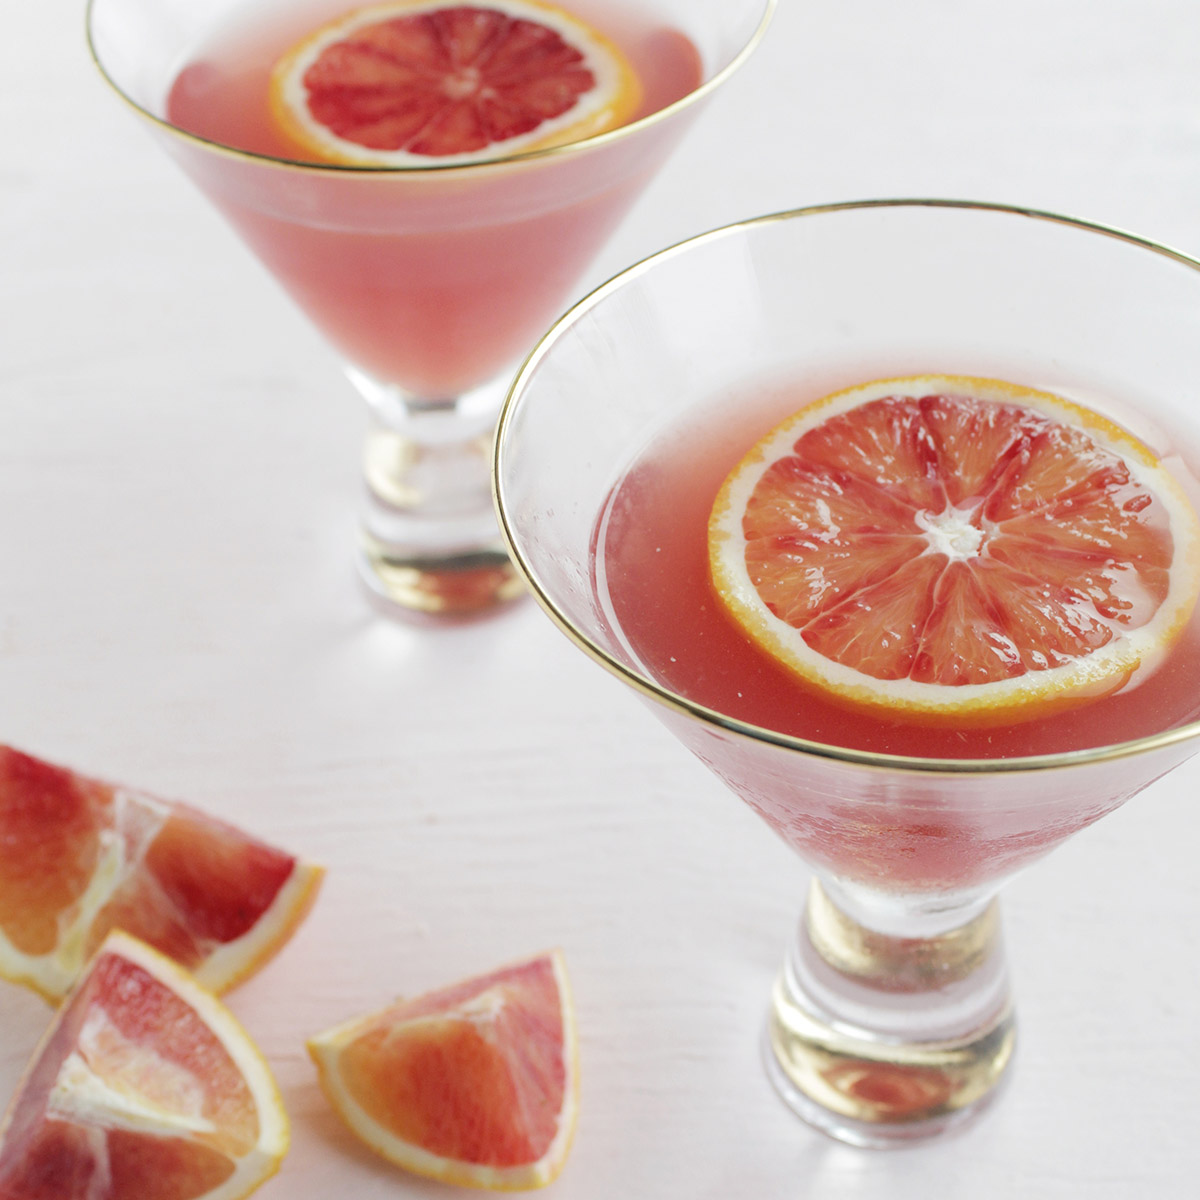 Pomegranate & Blood Orange Gin Martini (3 Ingredients)